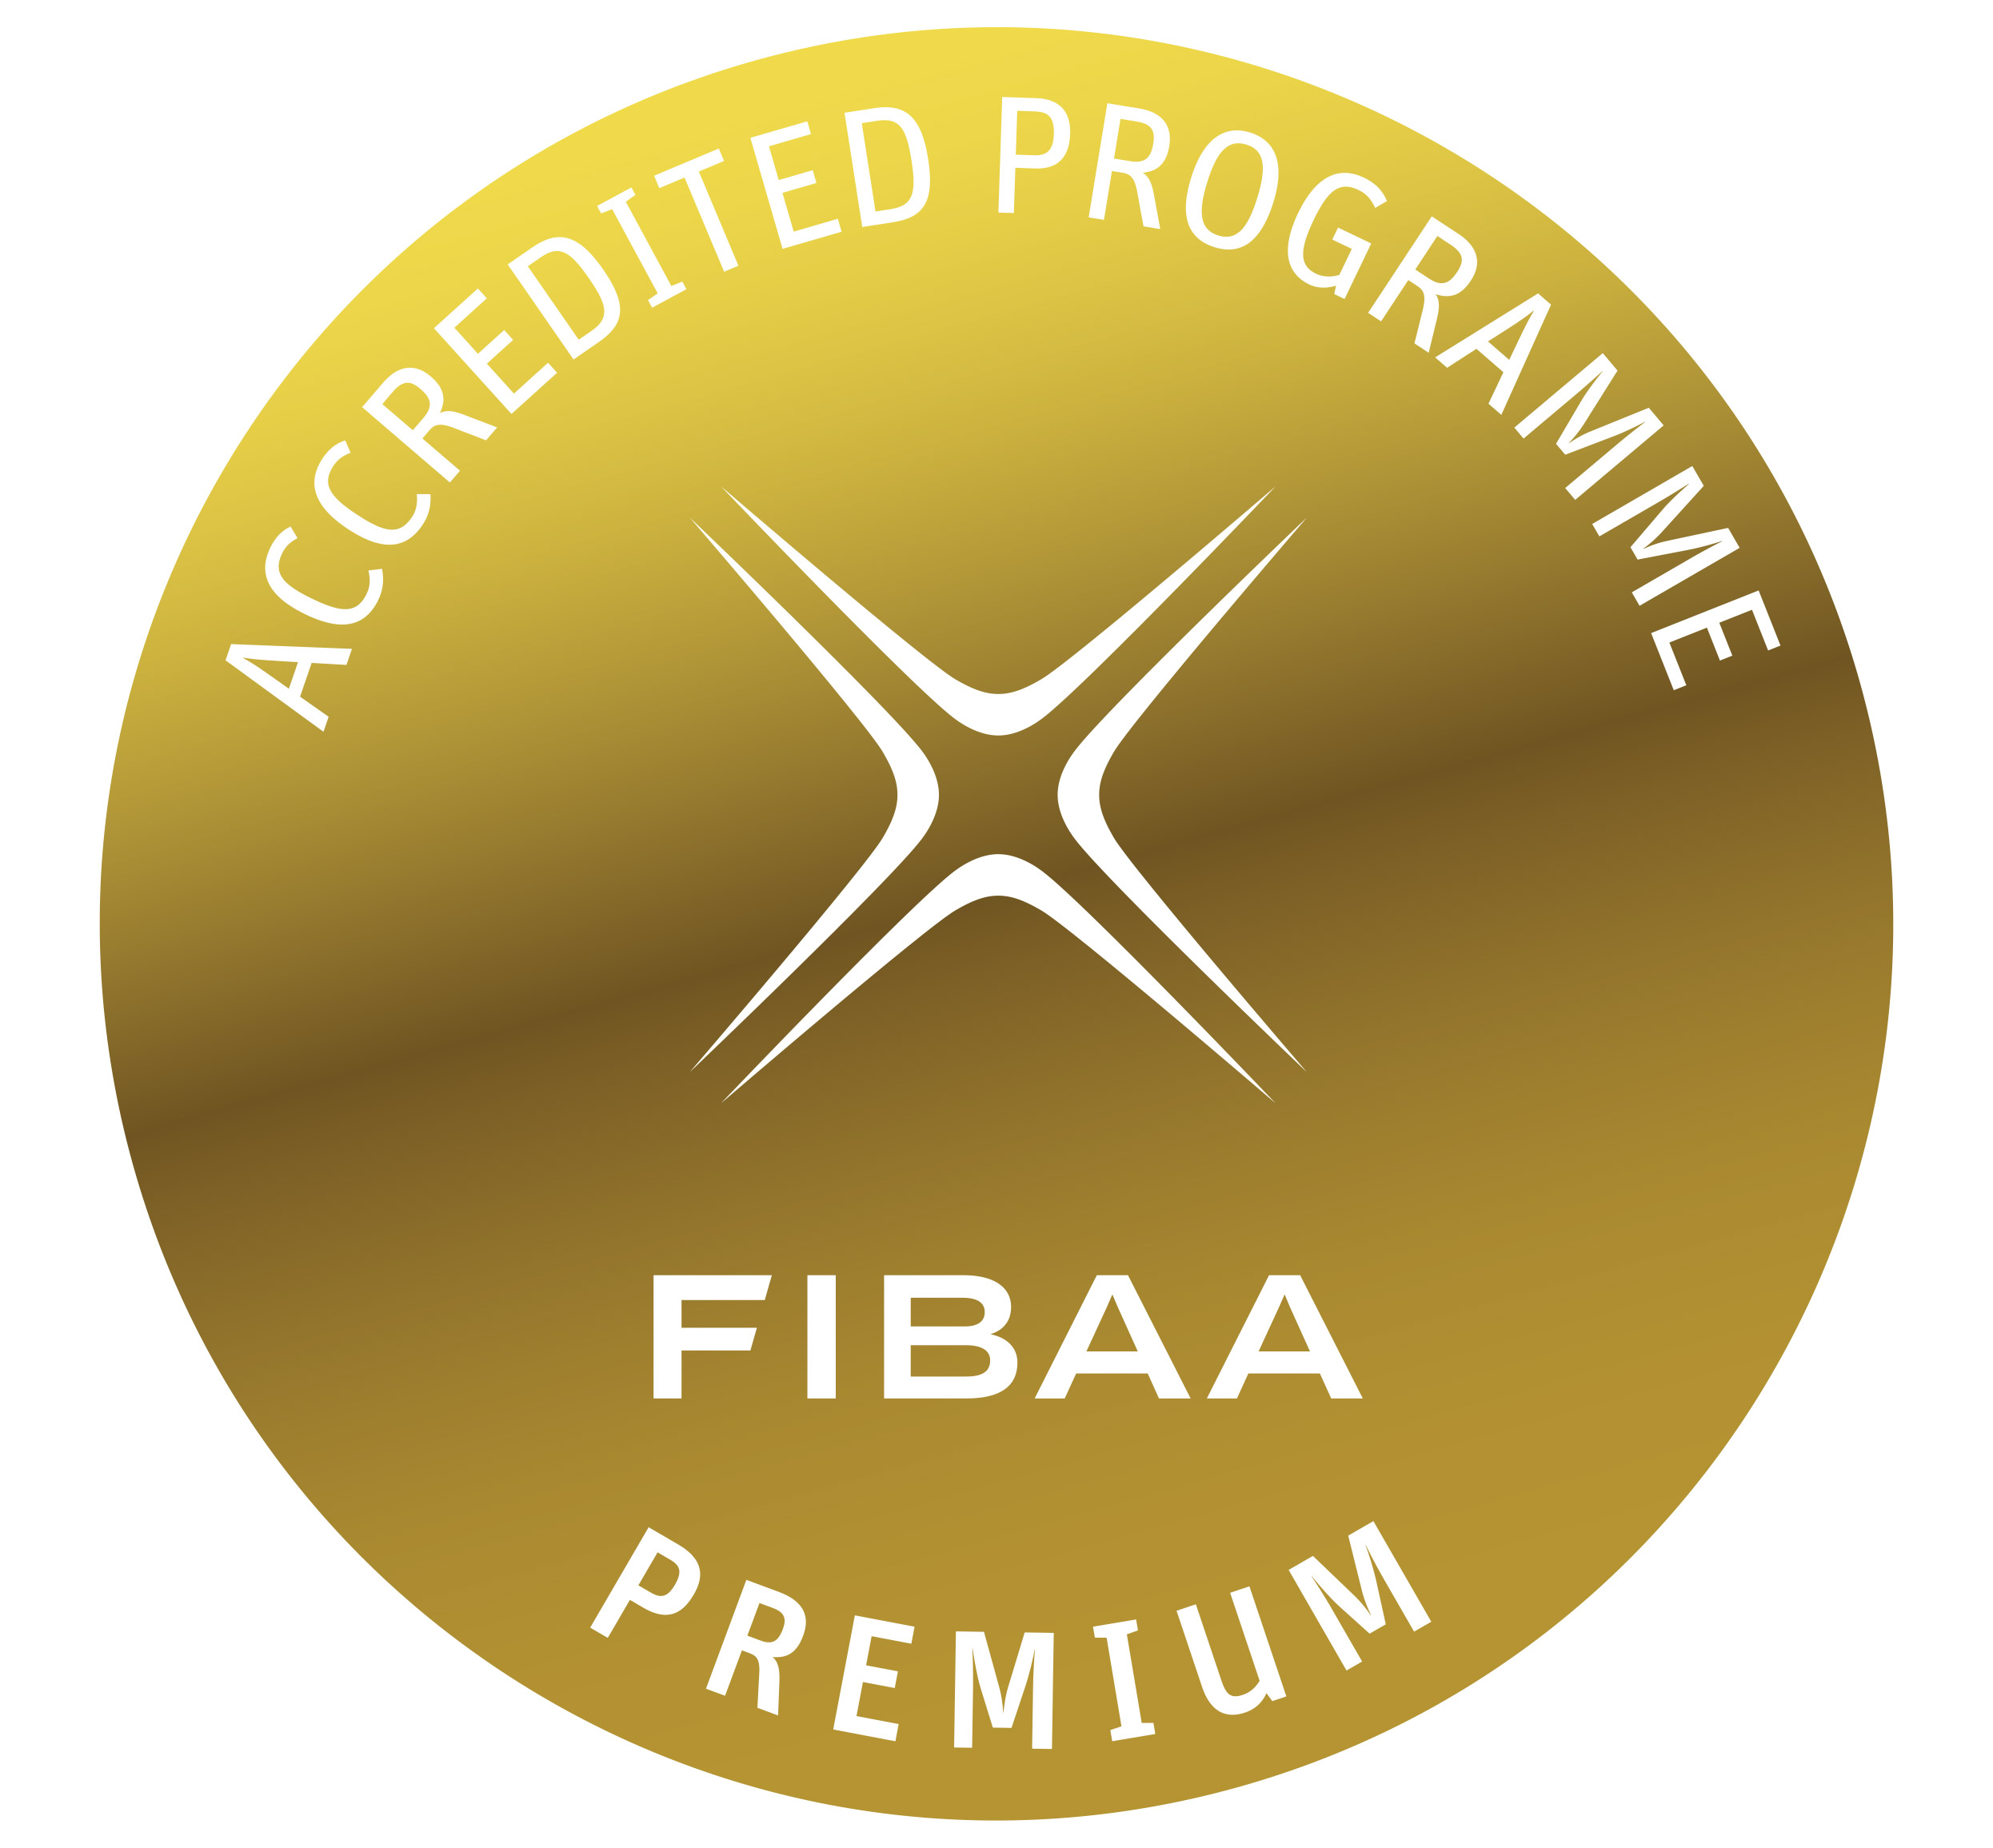 FIBAA Premium certificate